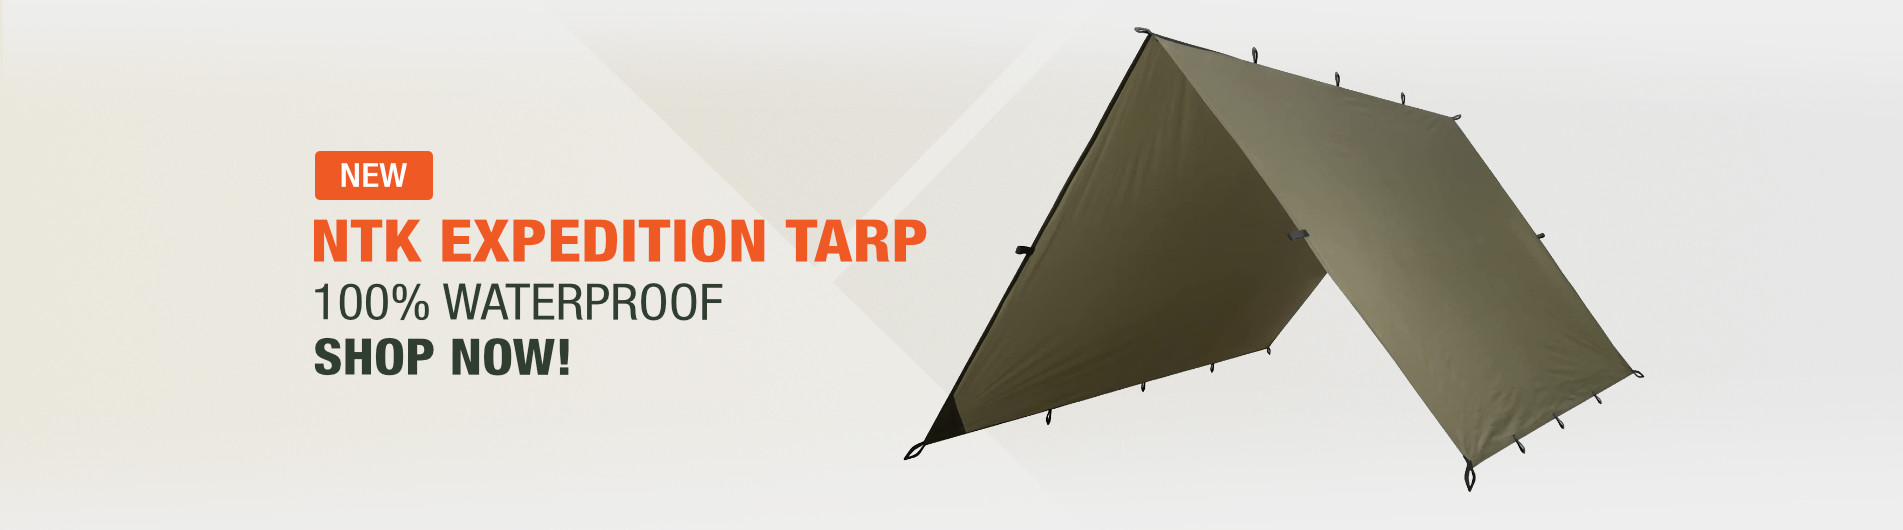 NTK Expedition Tarp - 100% Waterproof